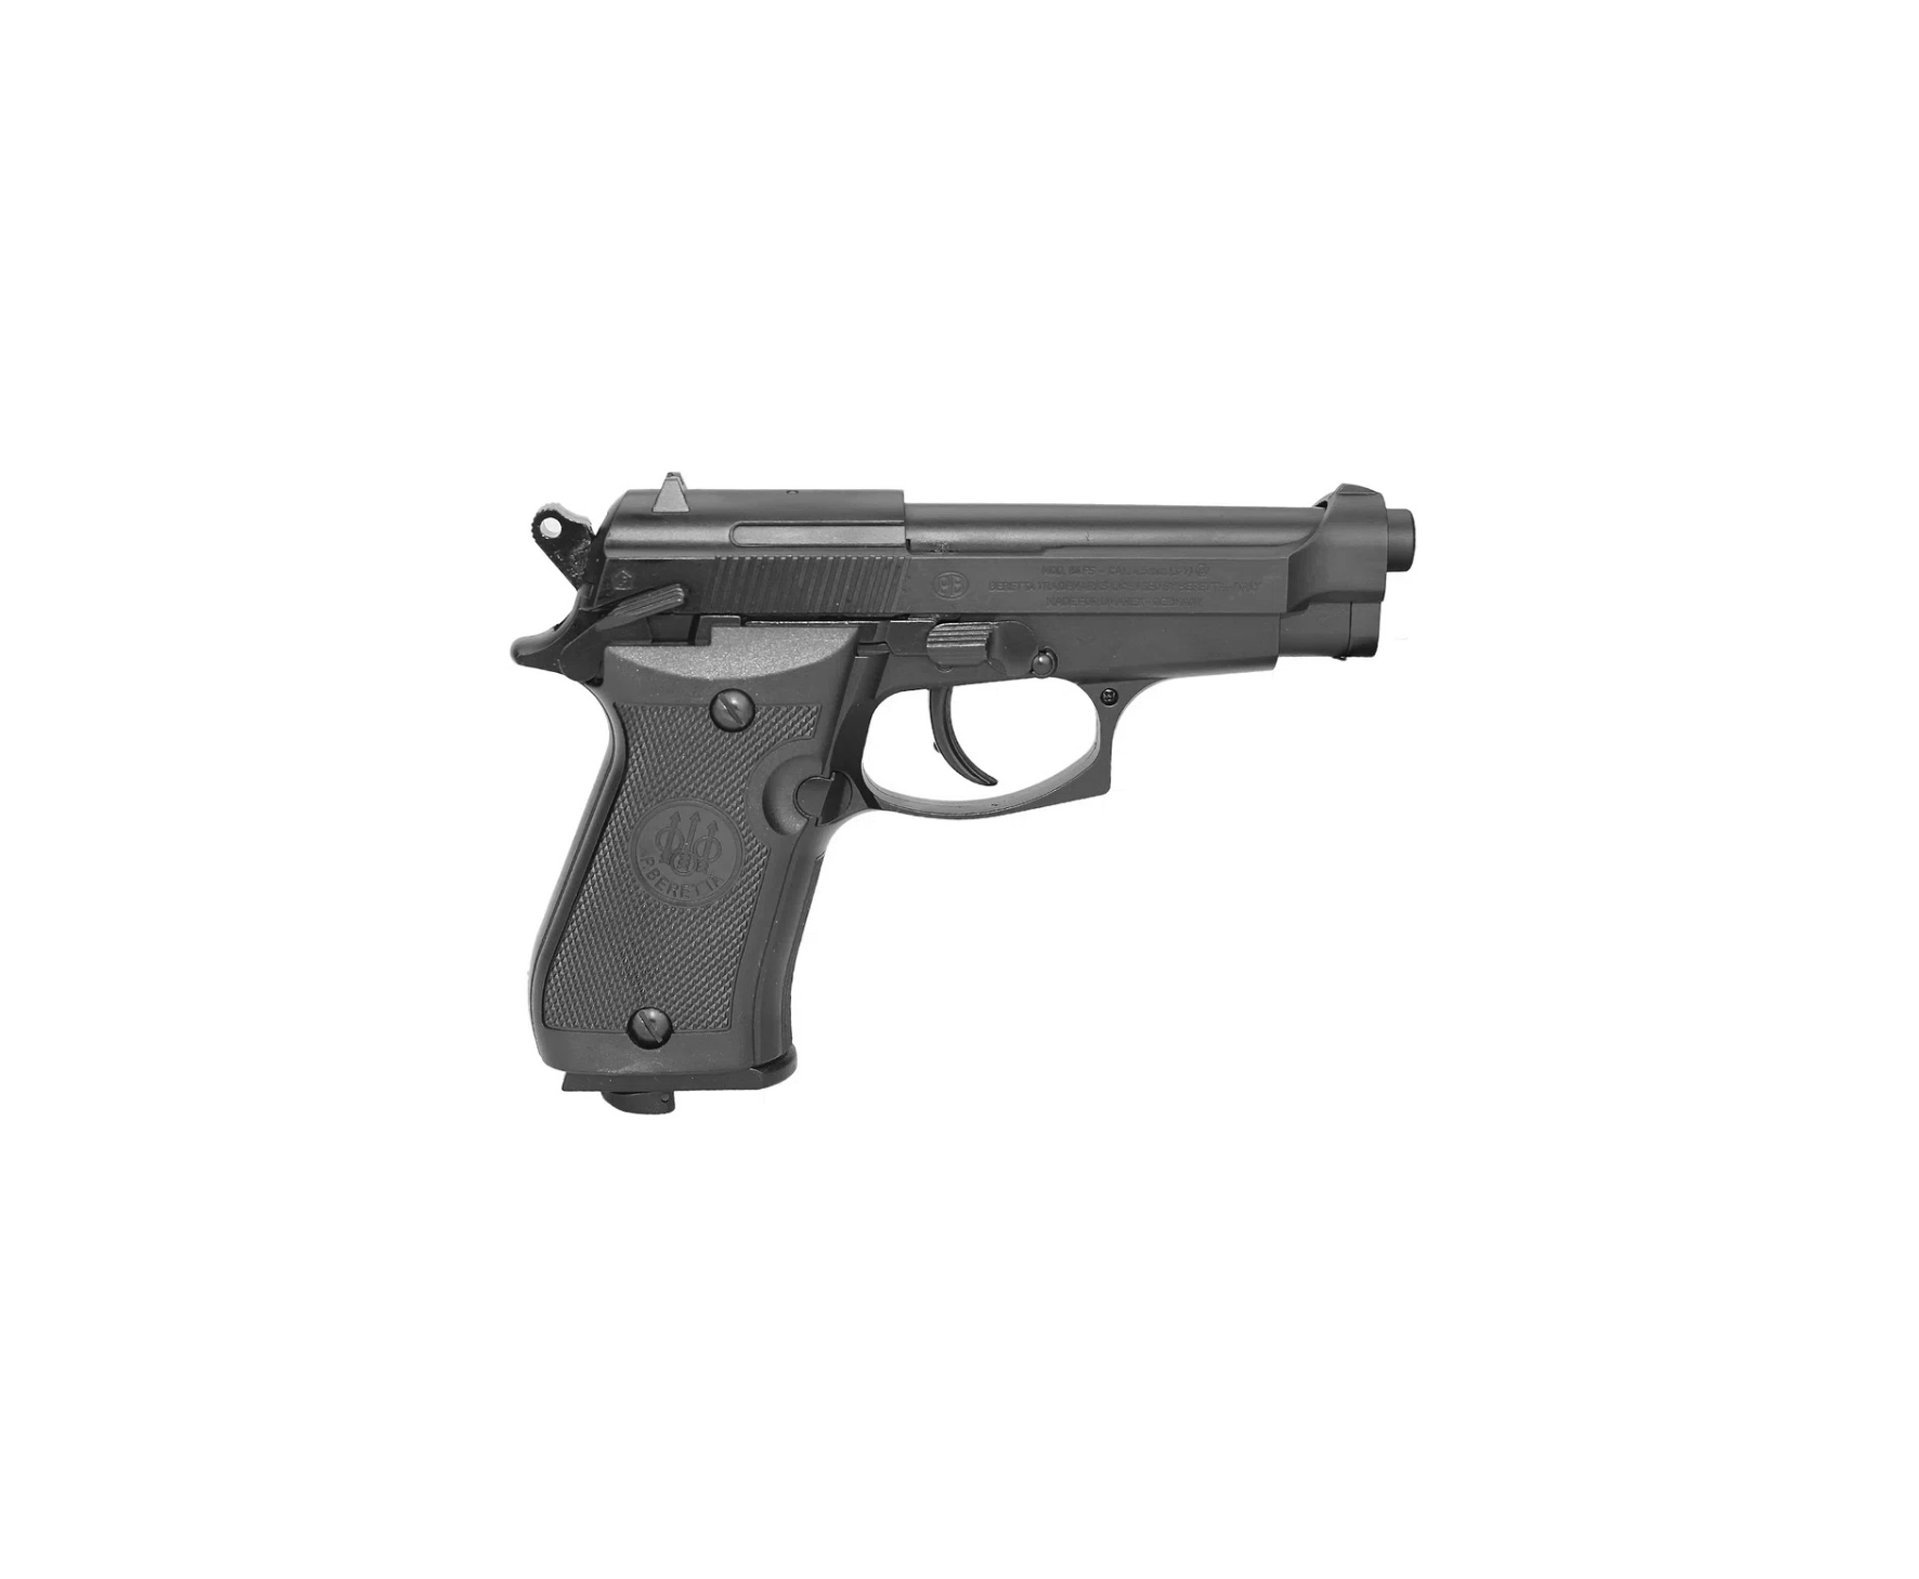 Pistola De Pressão Co2 Beretta 84 Fs Blowback Full Metal 4,5mm + Co2 + bbs + Case+ Óleo de silicone